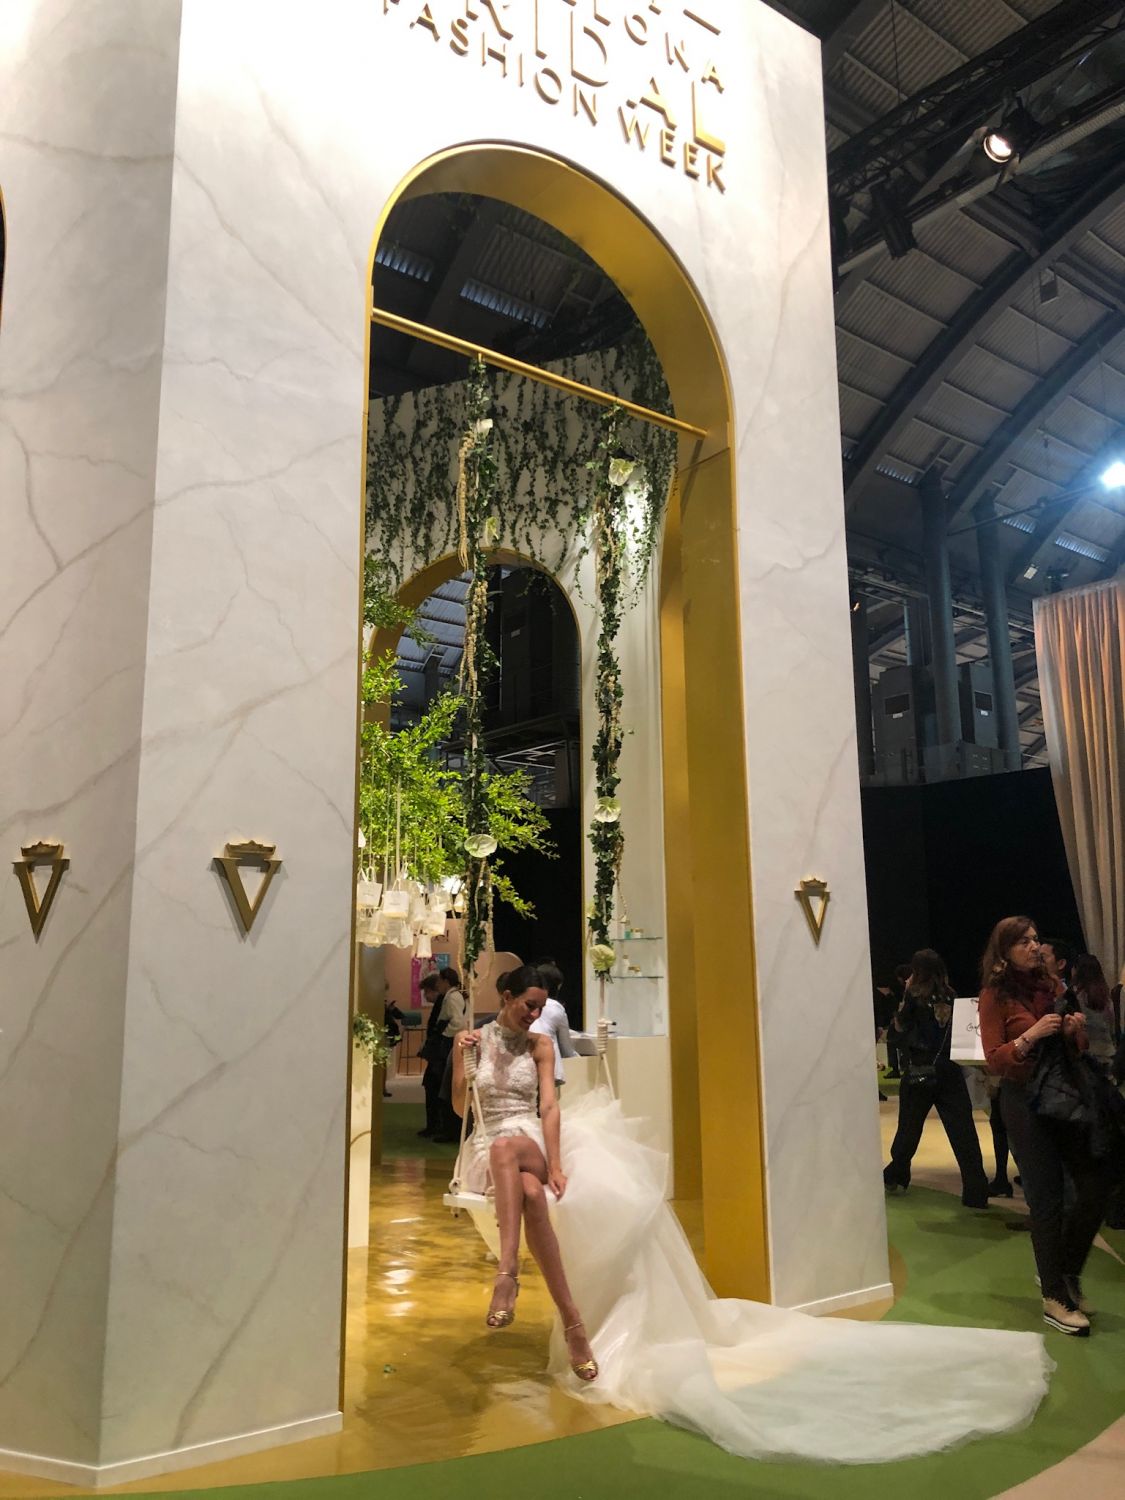 Valmont Barcelona Bridal Fashion Week – relacja